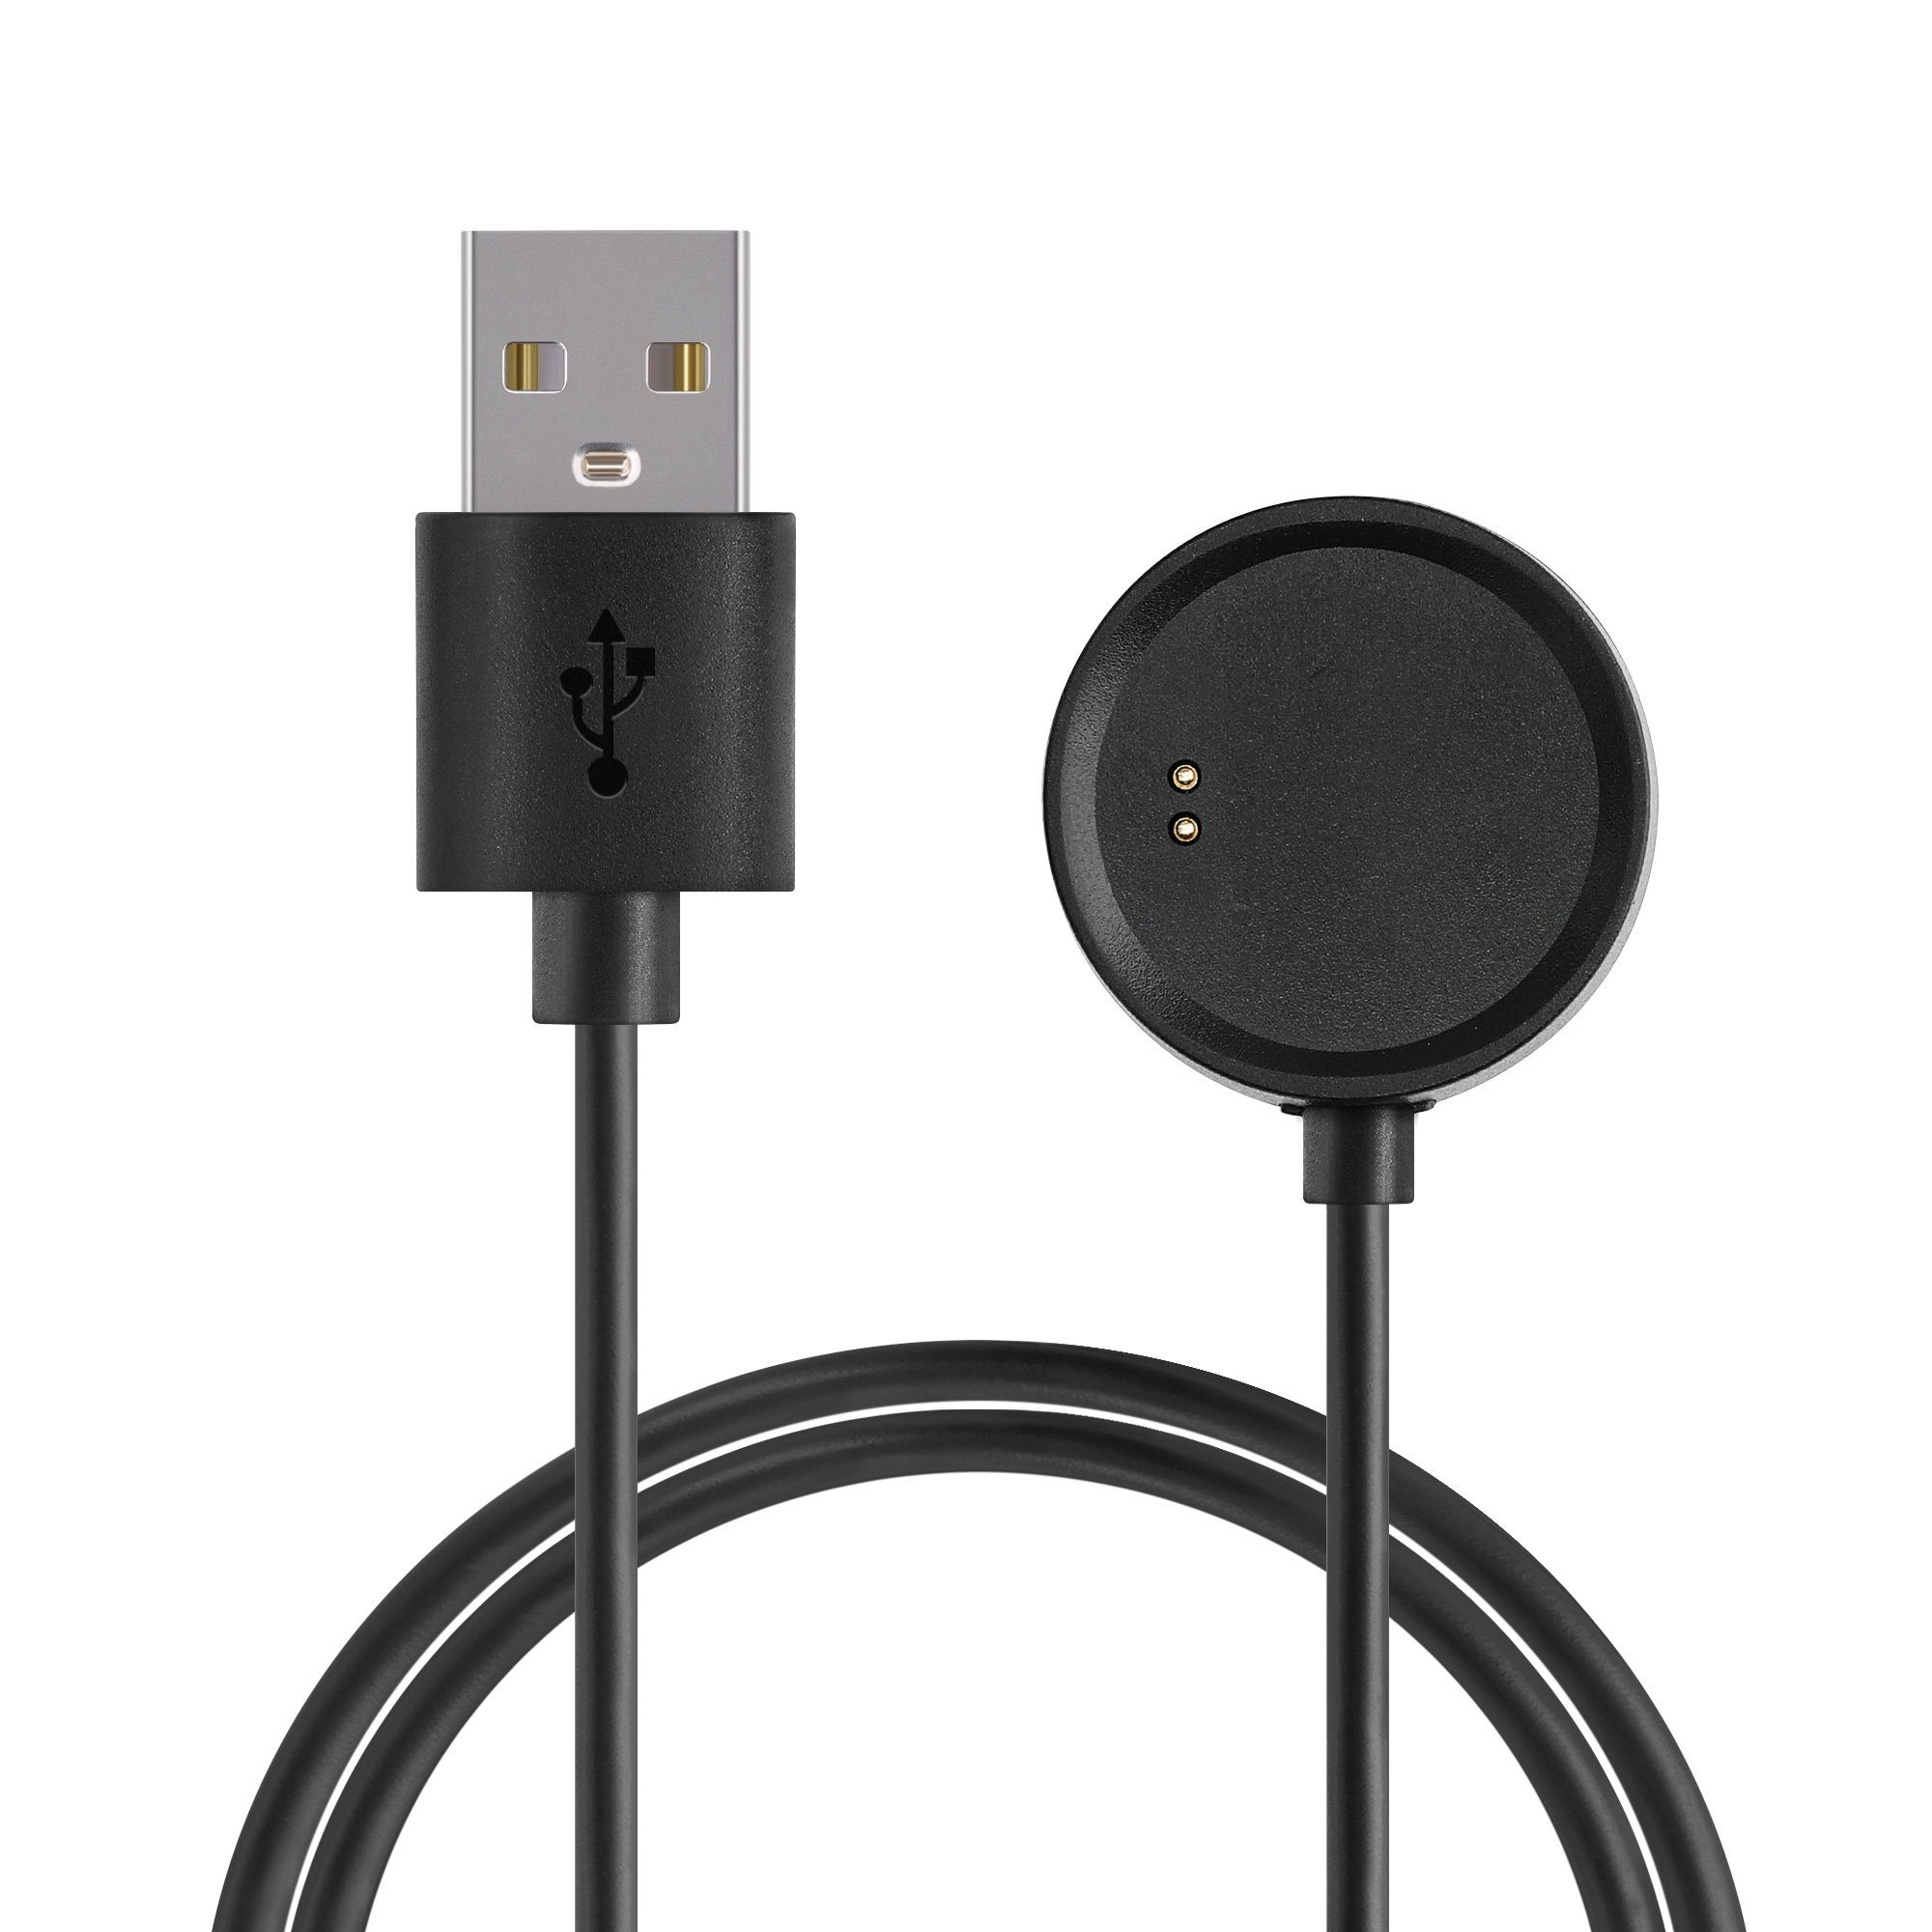 für Ladekabel Kabel kwmobile - - USB Ersatzkabel Aufladekabel Realme Charger (RMA161) Watch Fitnesstracker Watch Smart Elektro-Kabel,